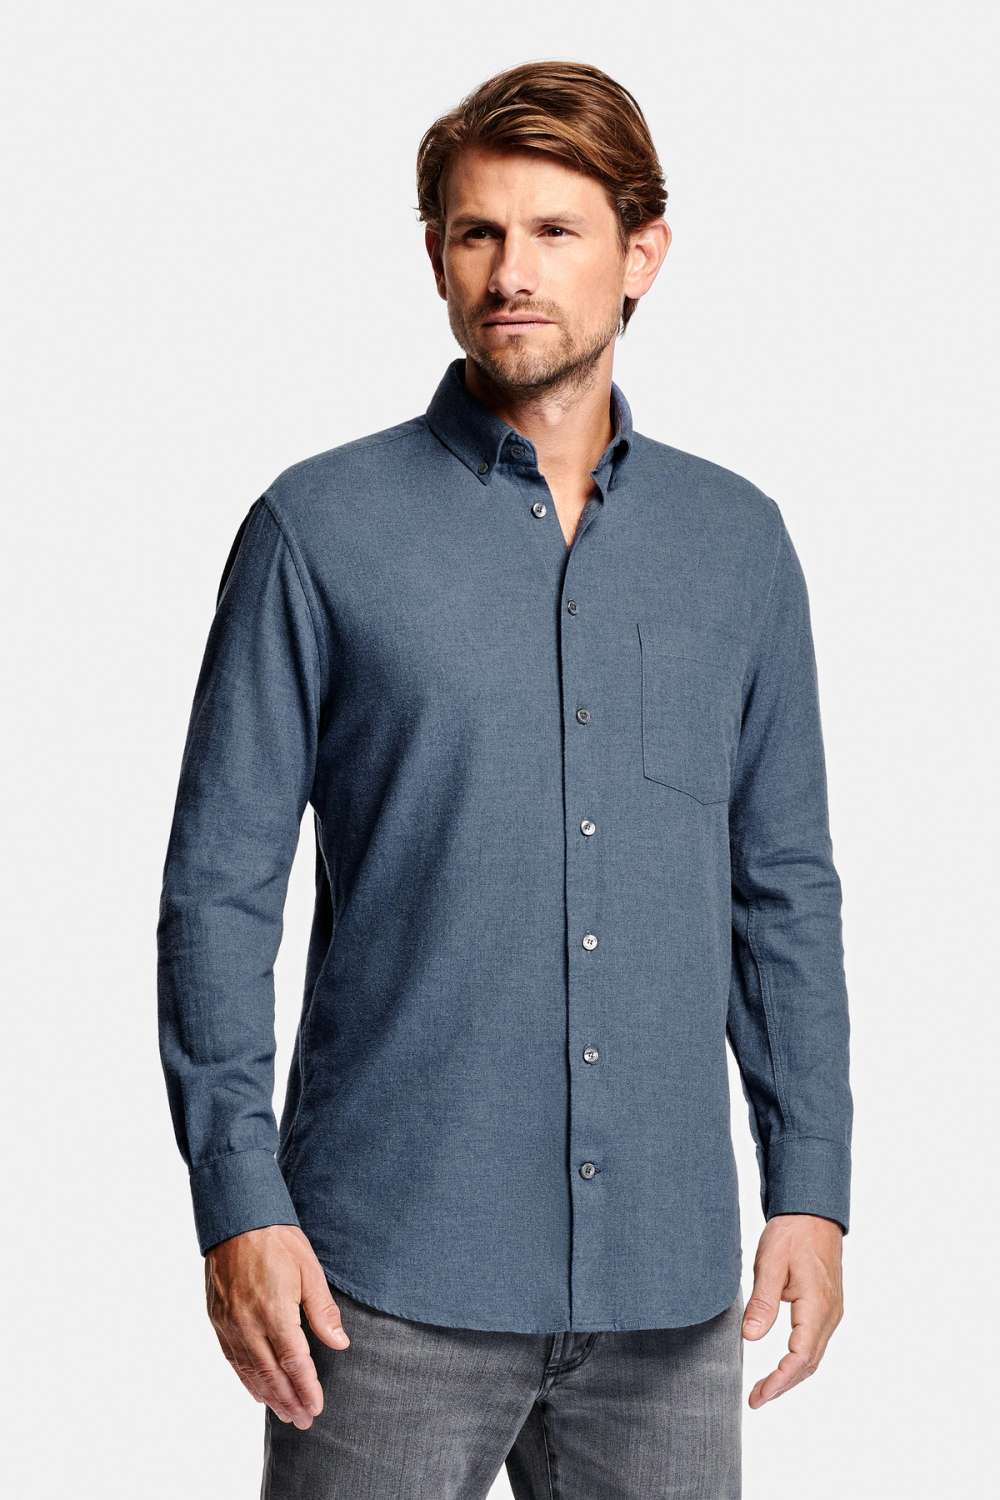 Mavericks * The Flannel Shirt